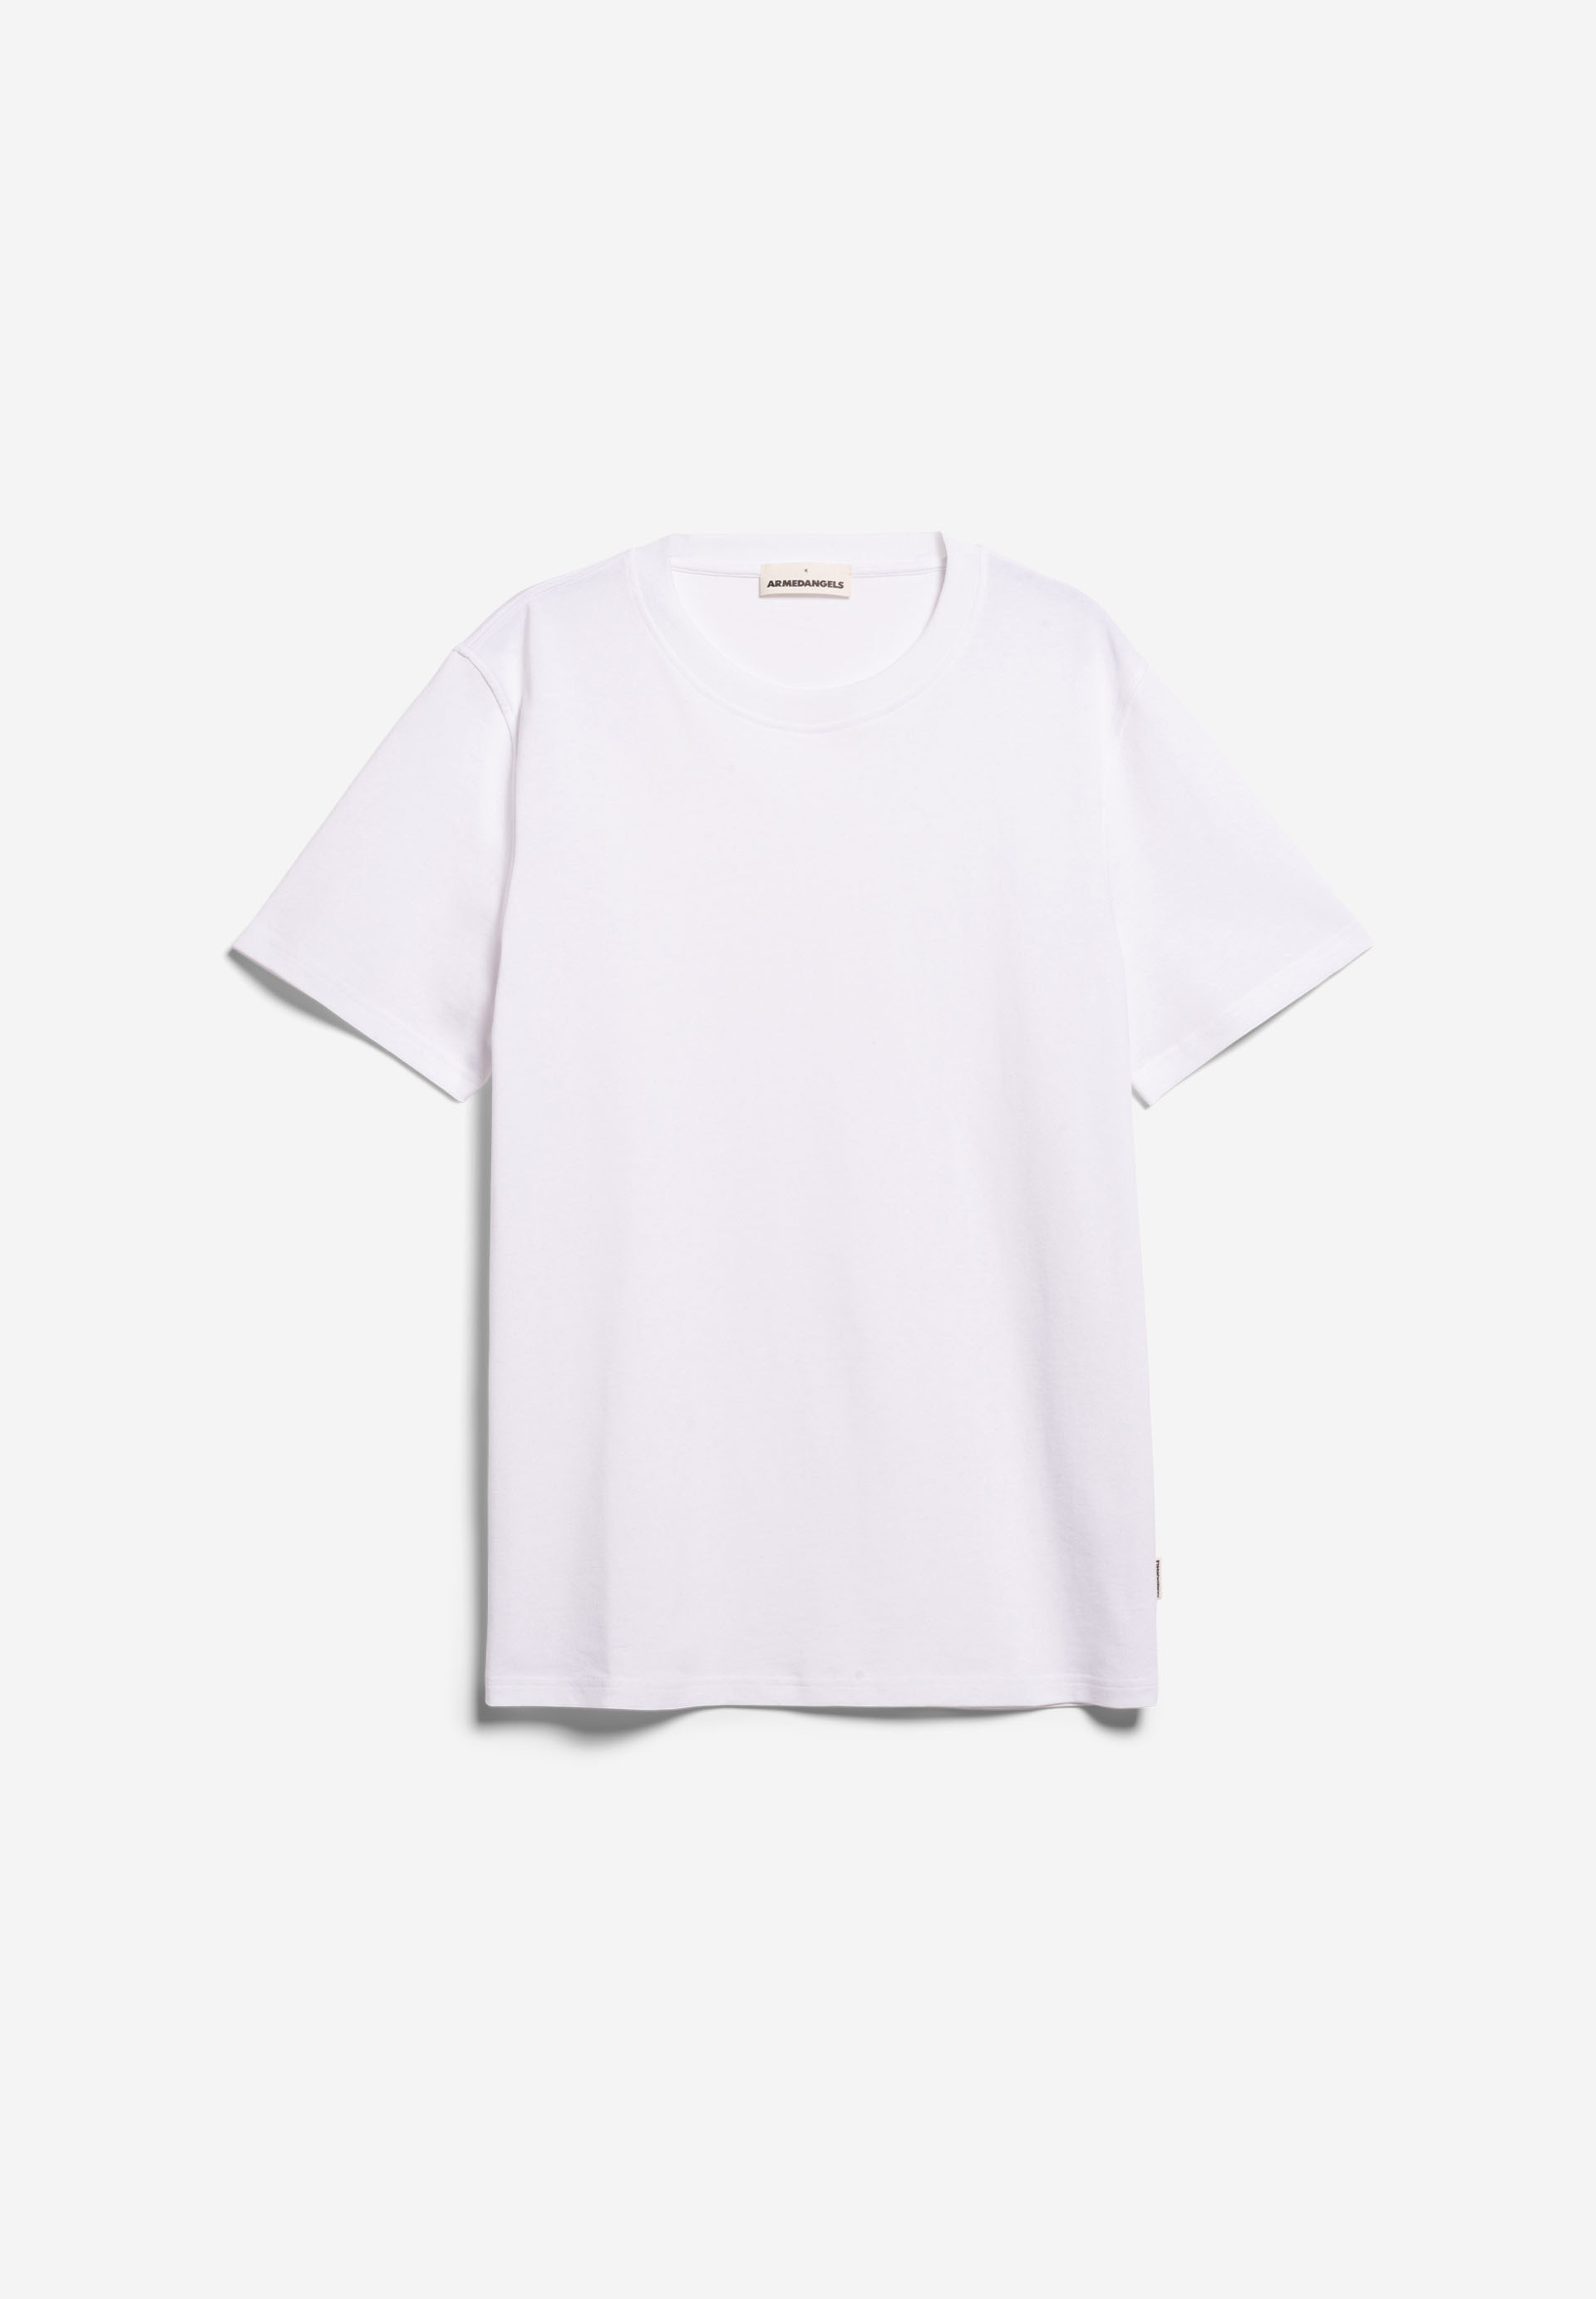 MAARKOS Heavyweight T-Shirt Relaxed Fit made of Organic Cotton Mix